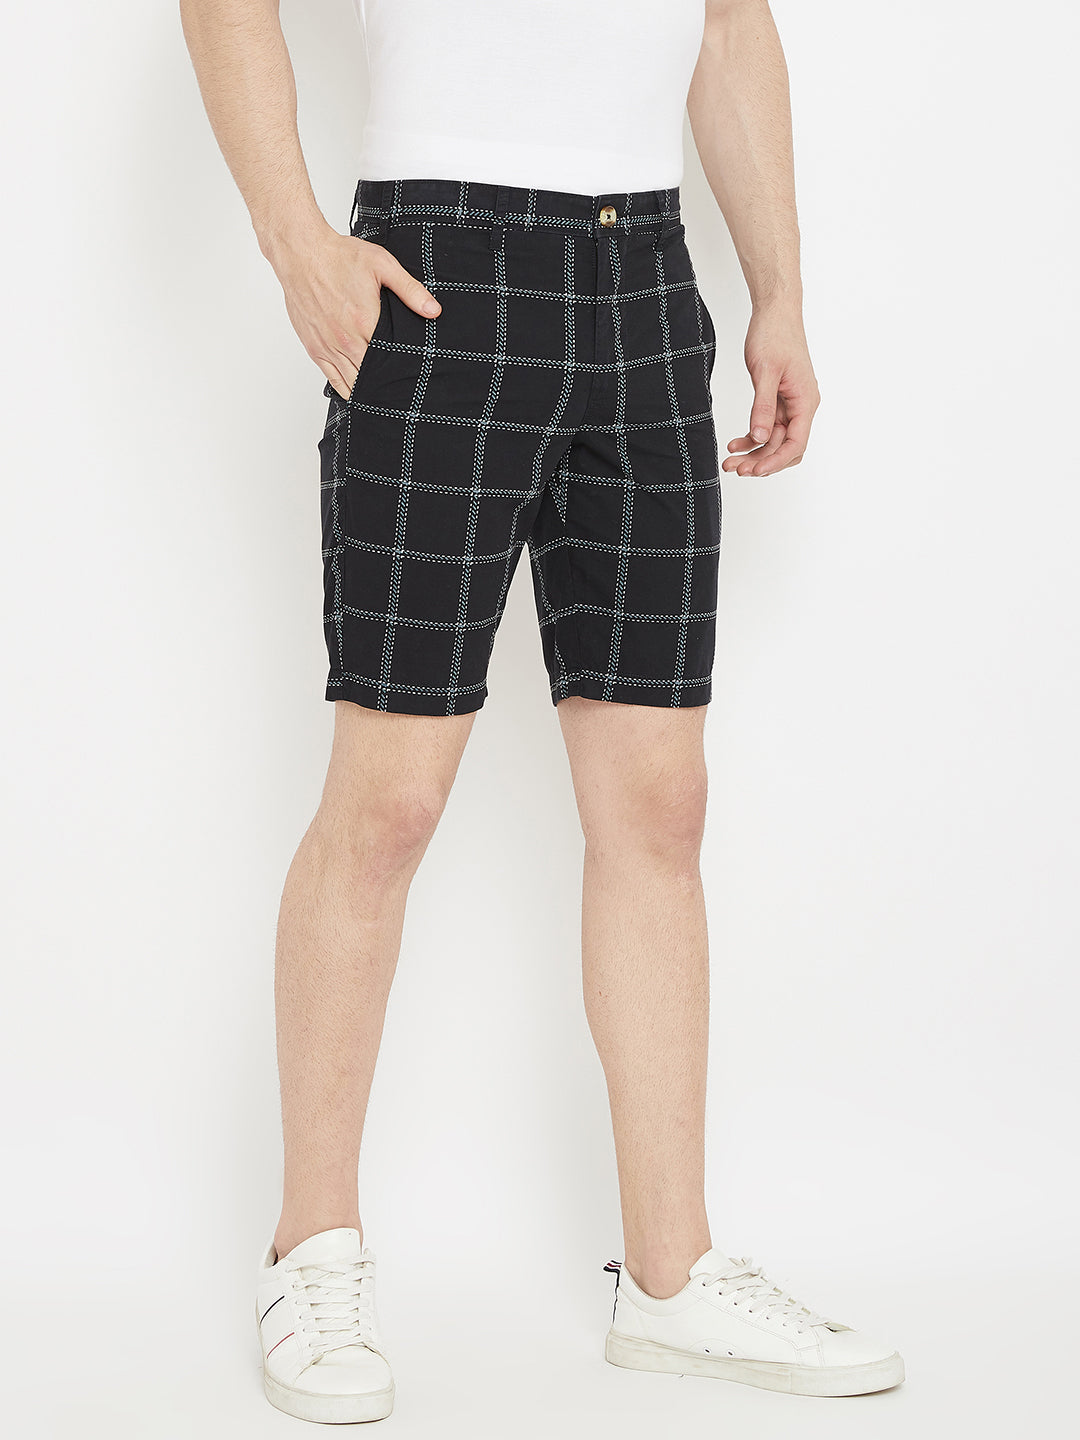 Black Checked shorts - Men Shorts